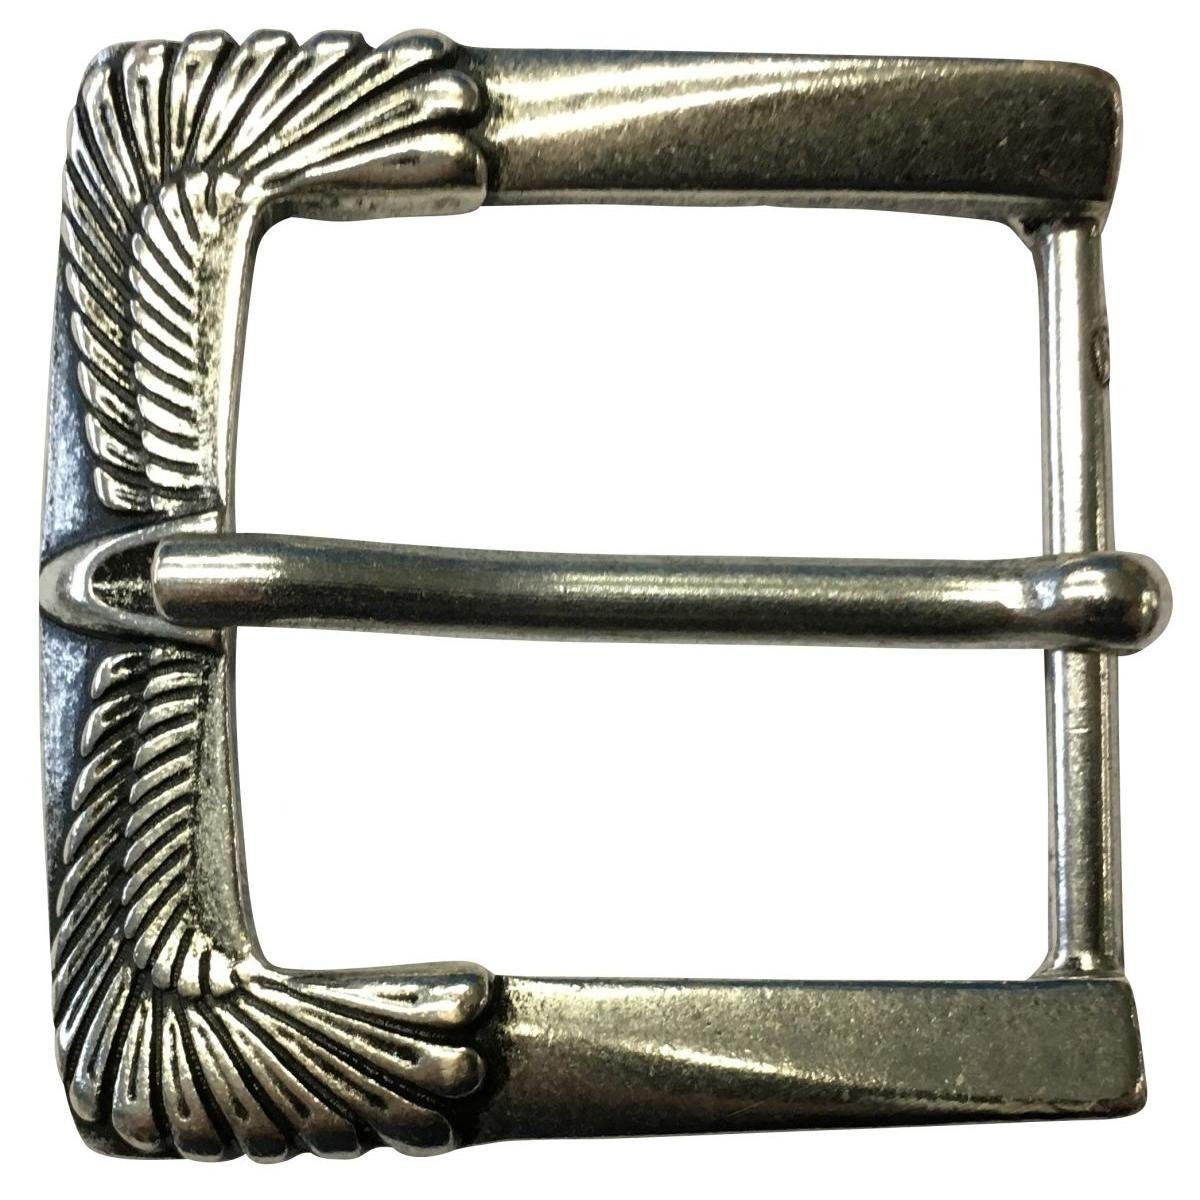 cm - Gürtelschließe Wing 4cm - Gürtel 4,0 BELTINGER - Dorn-Schließe bis Gürtelschnalle 40mm